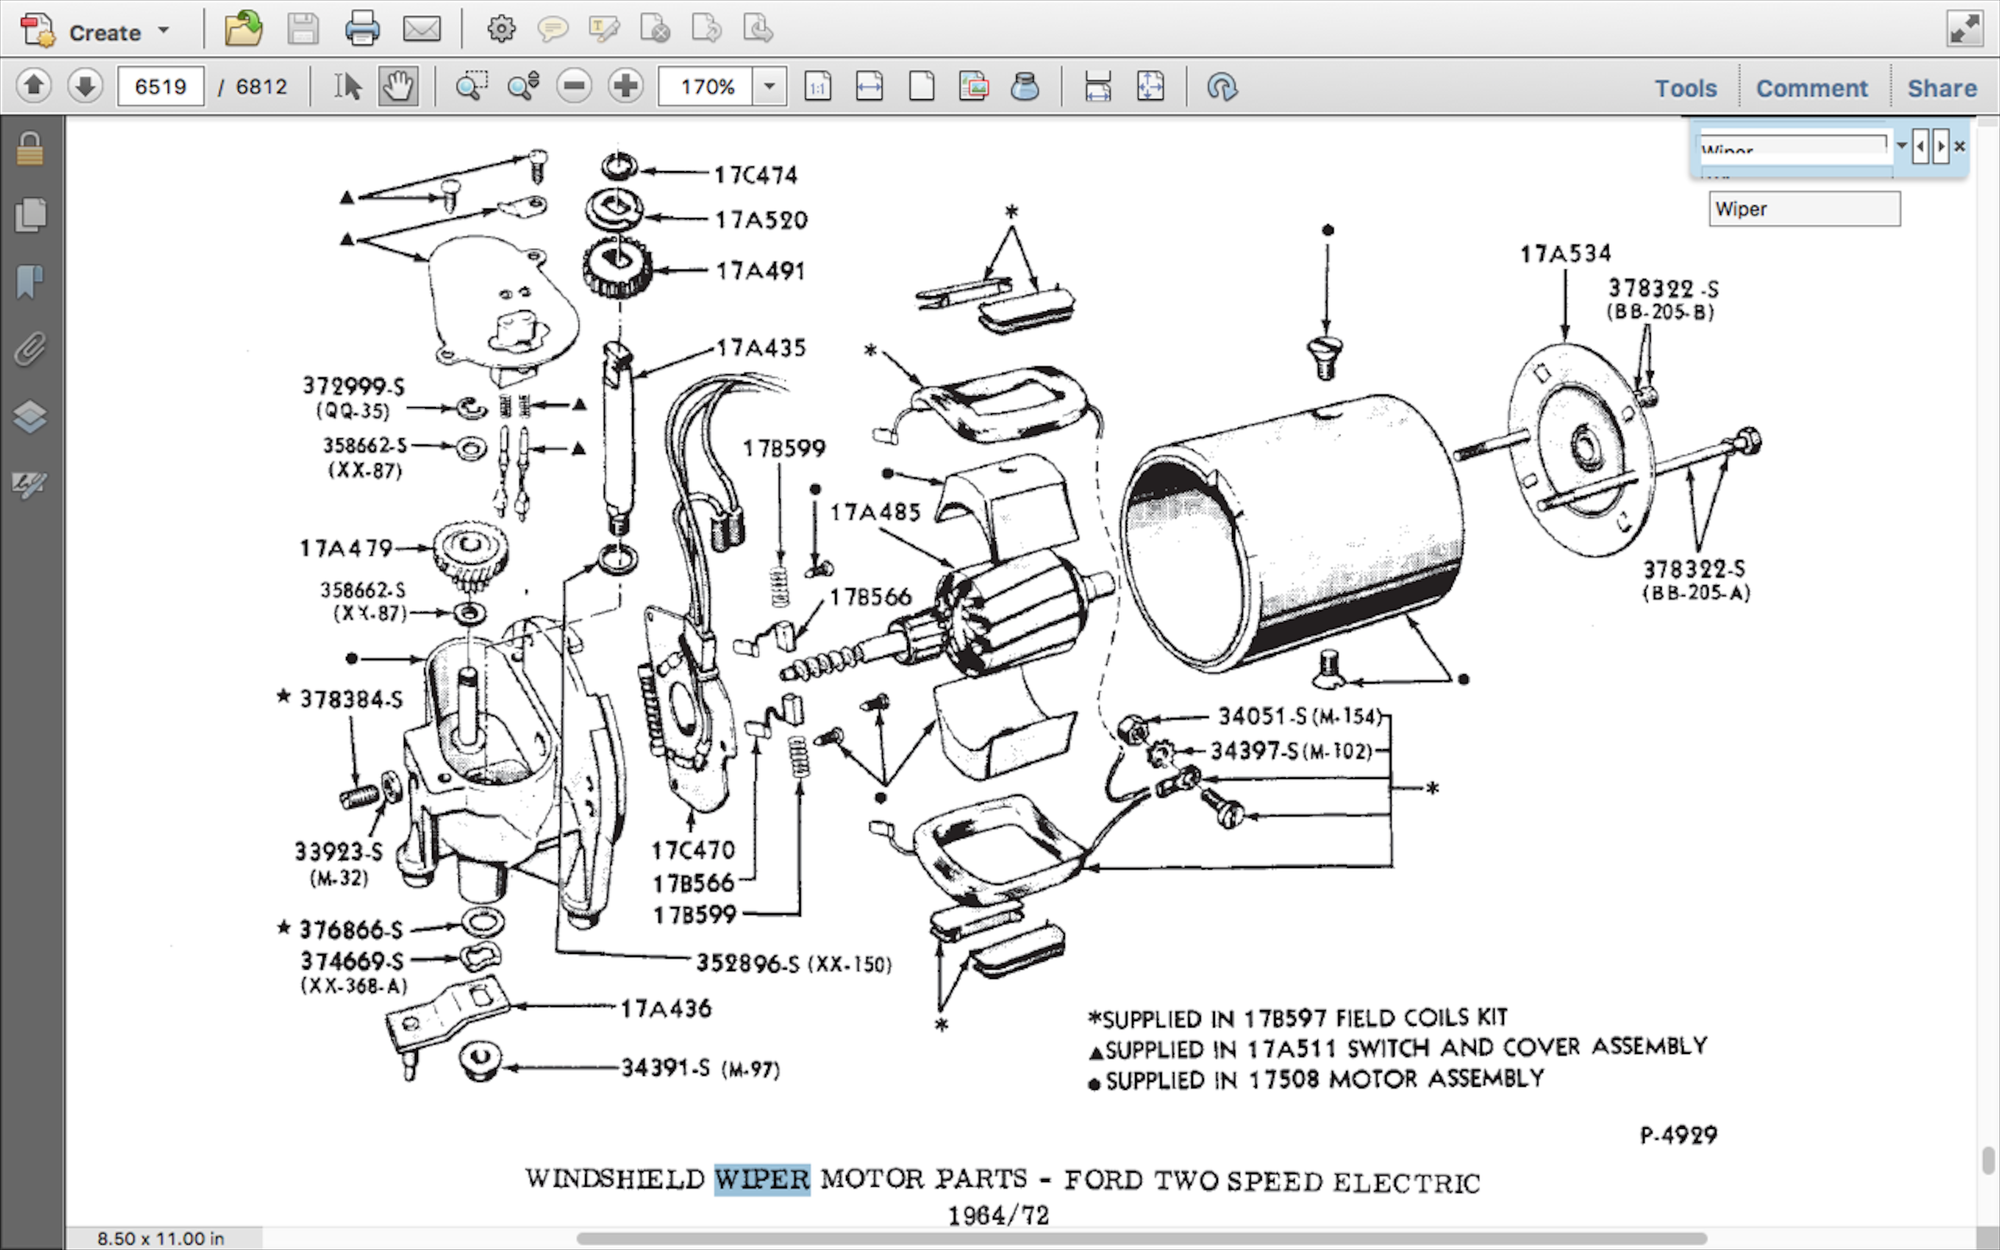 2 Speed Wiper Motor Wiring Diagram from cimg1.ibsrv.net